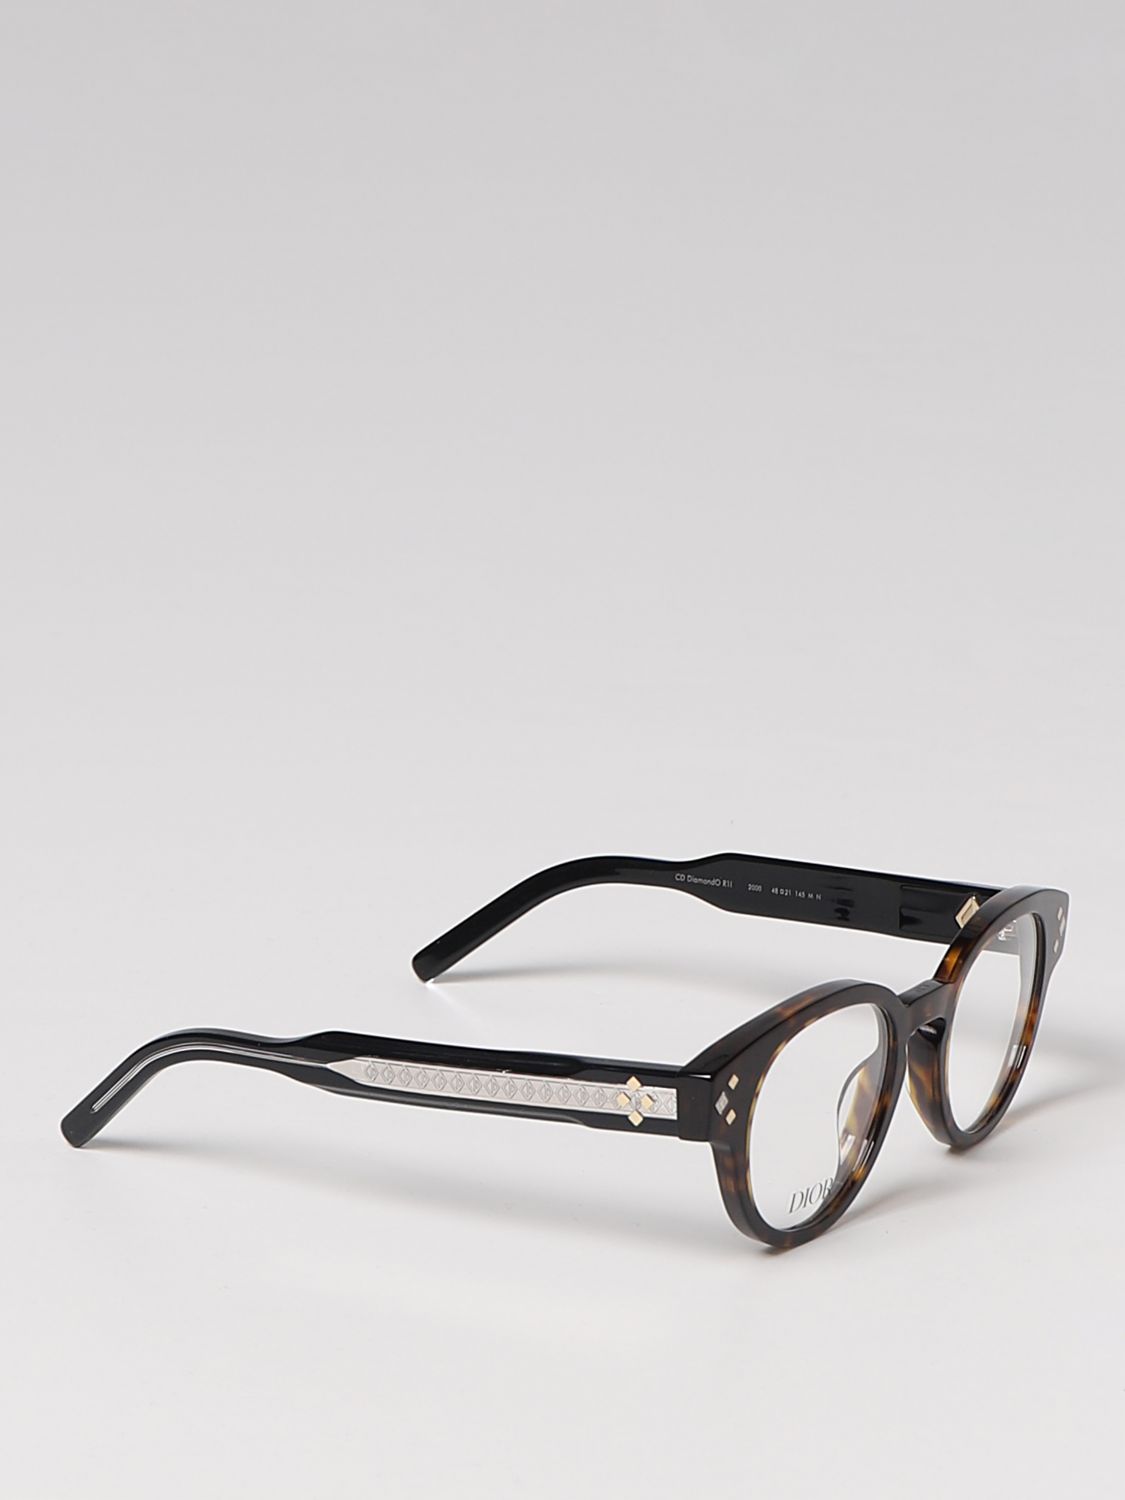 Buy Dior Homme Eyeglass 0221 Aviator Online in UAE  Sharaf DG